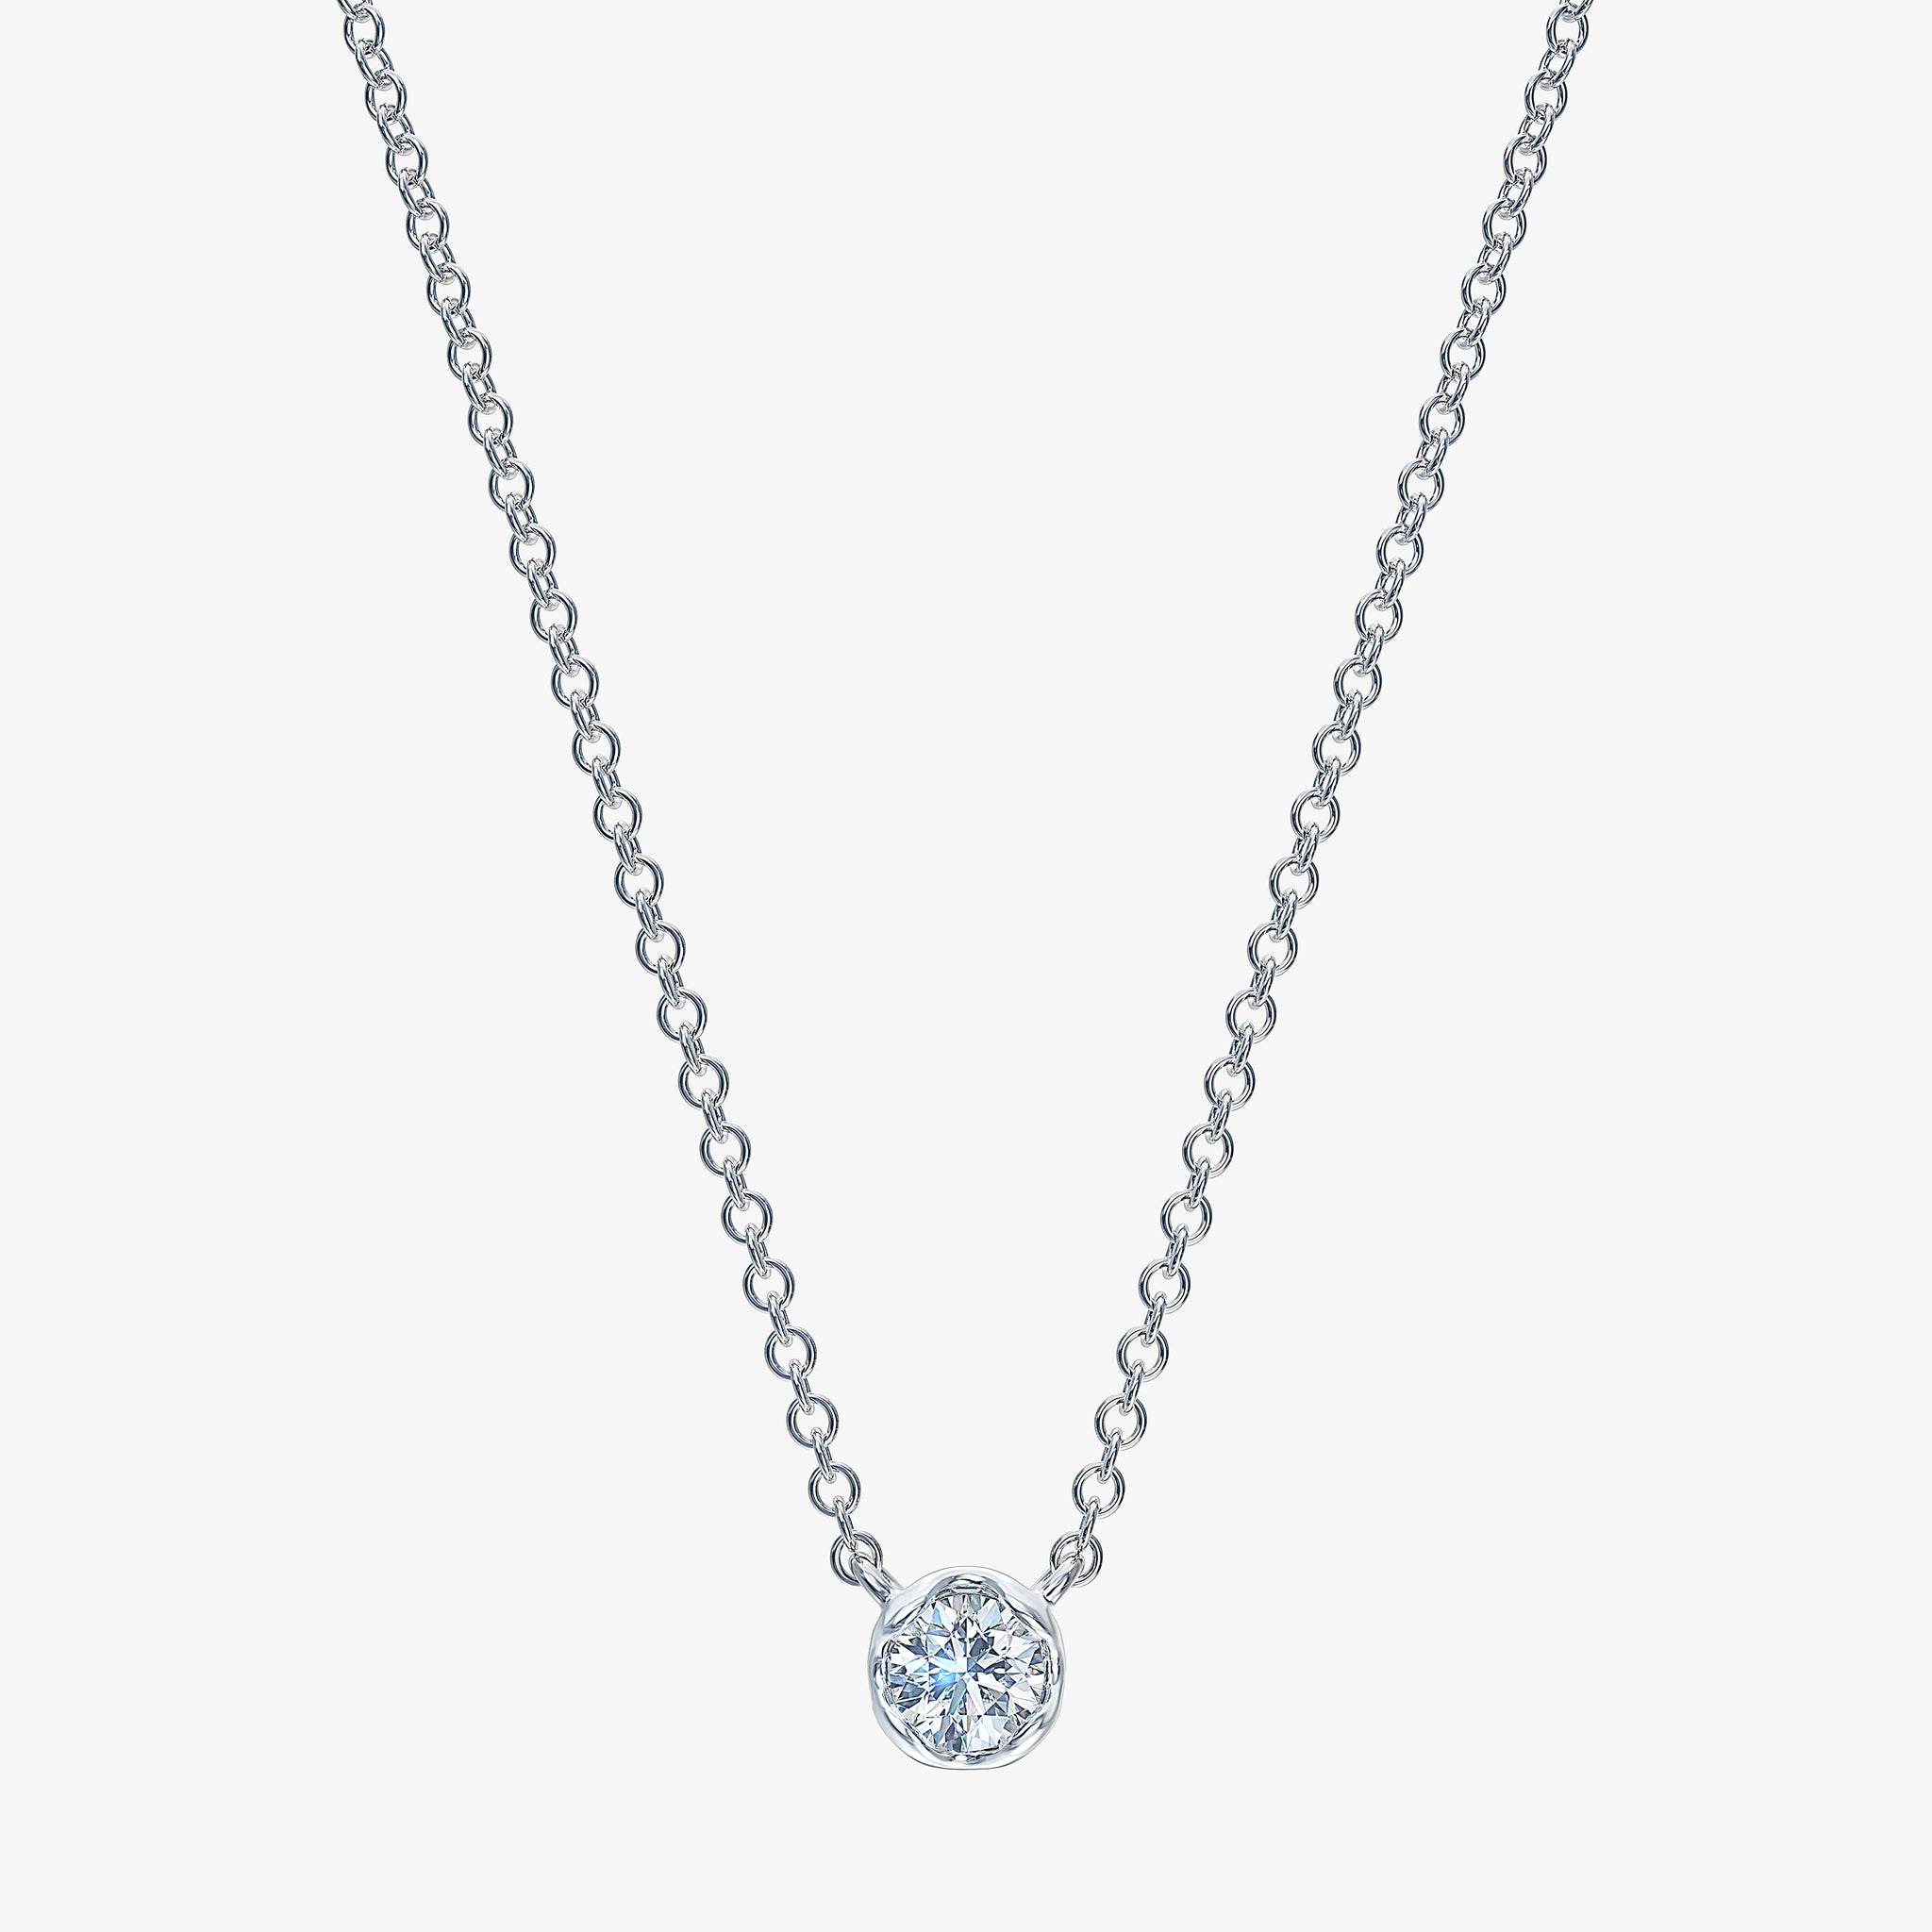 J'EVAR 14KT White Gold Solitaire ALTR Lab Grown Diamond Necklace Front View | 0.10 CT